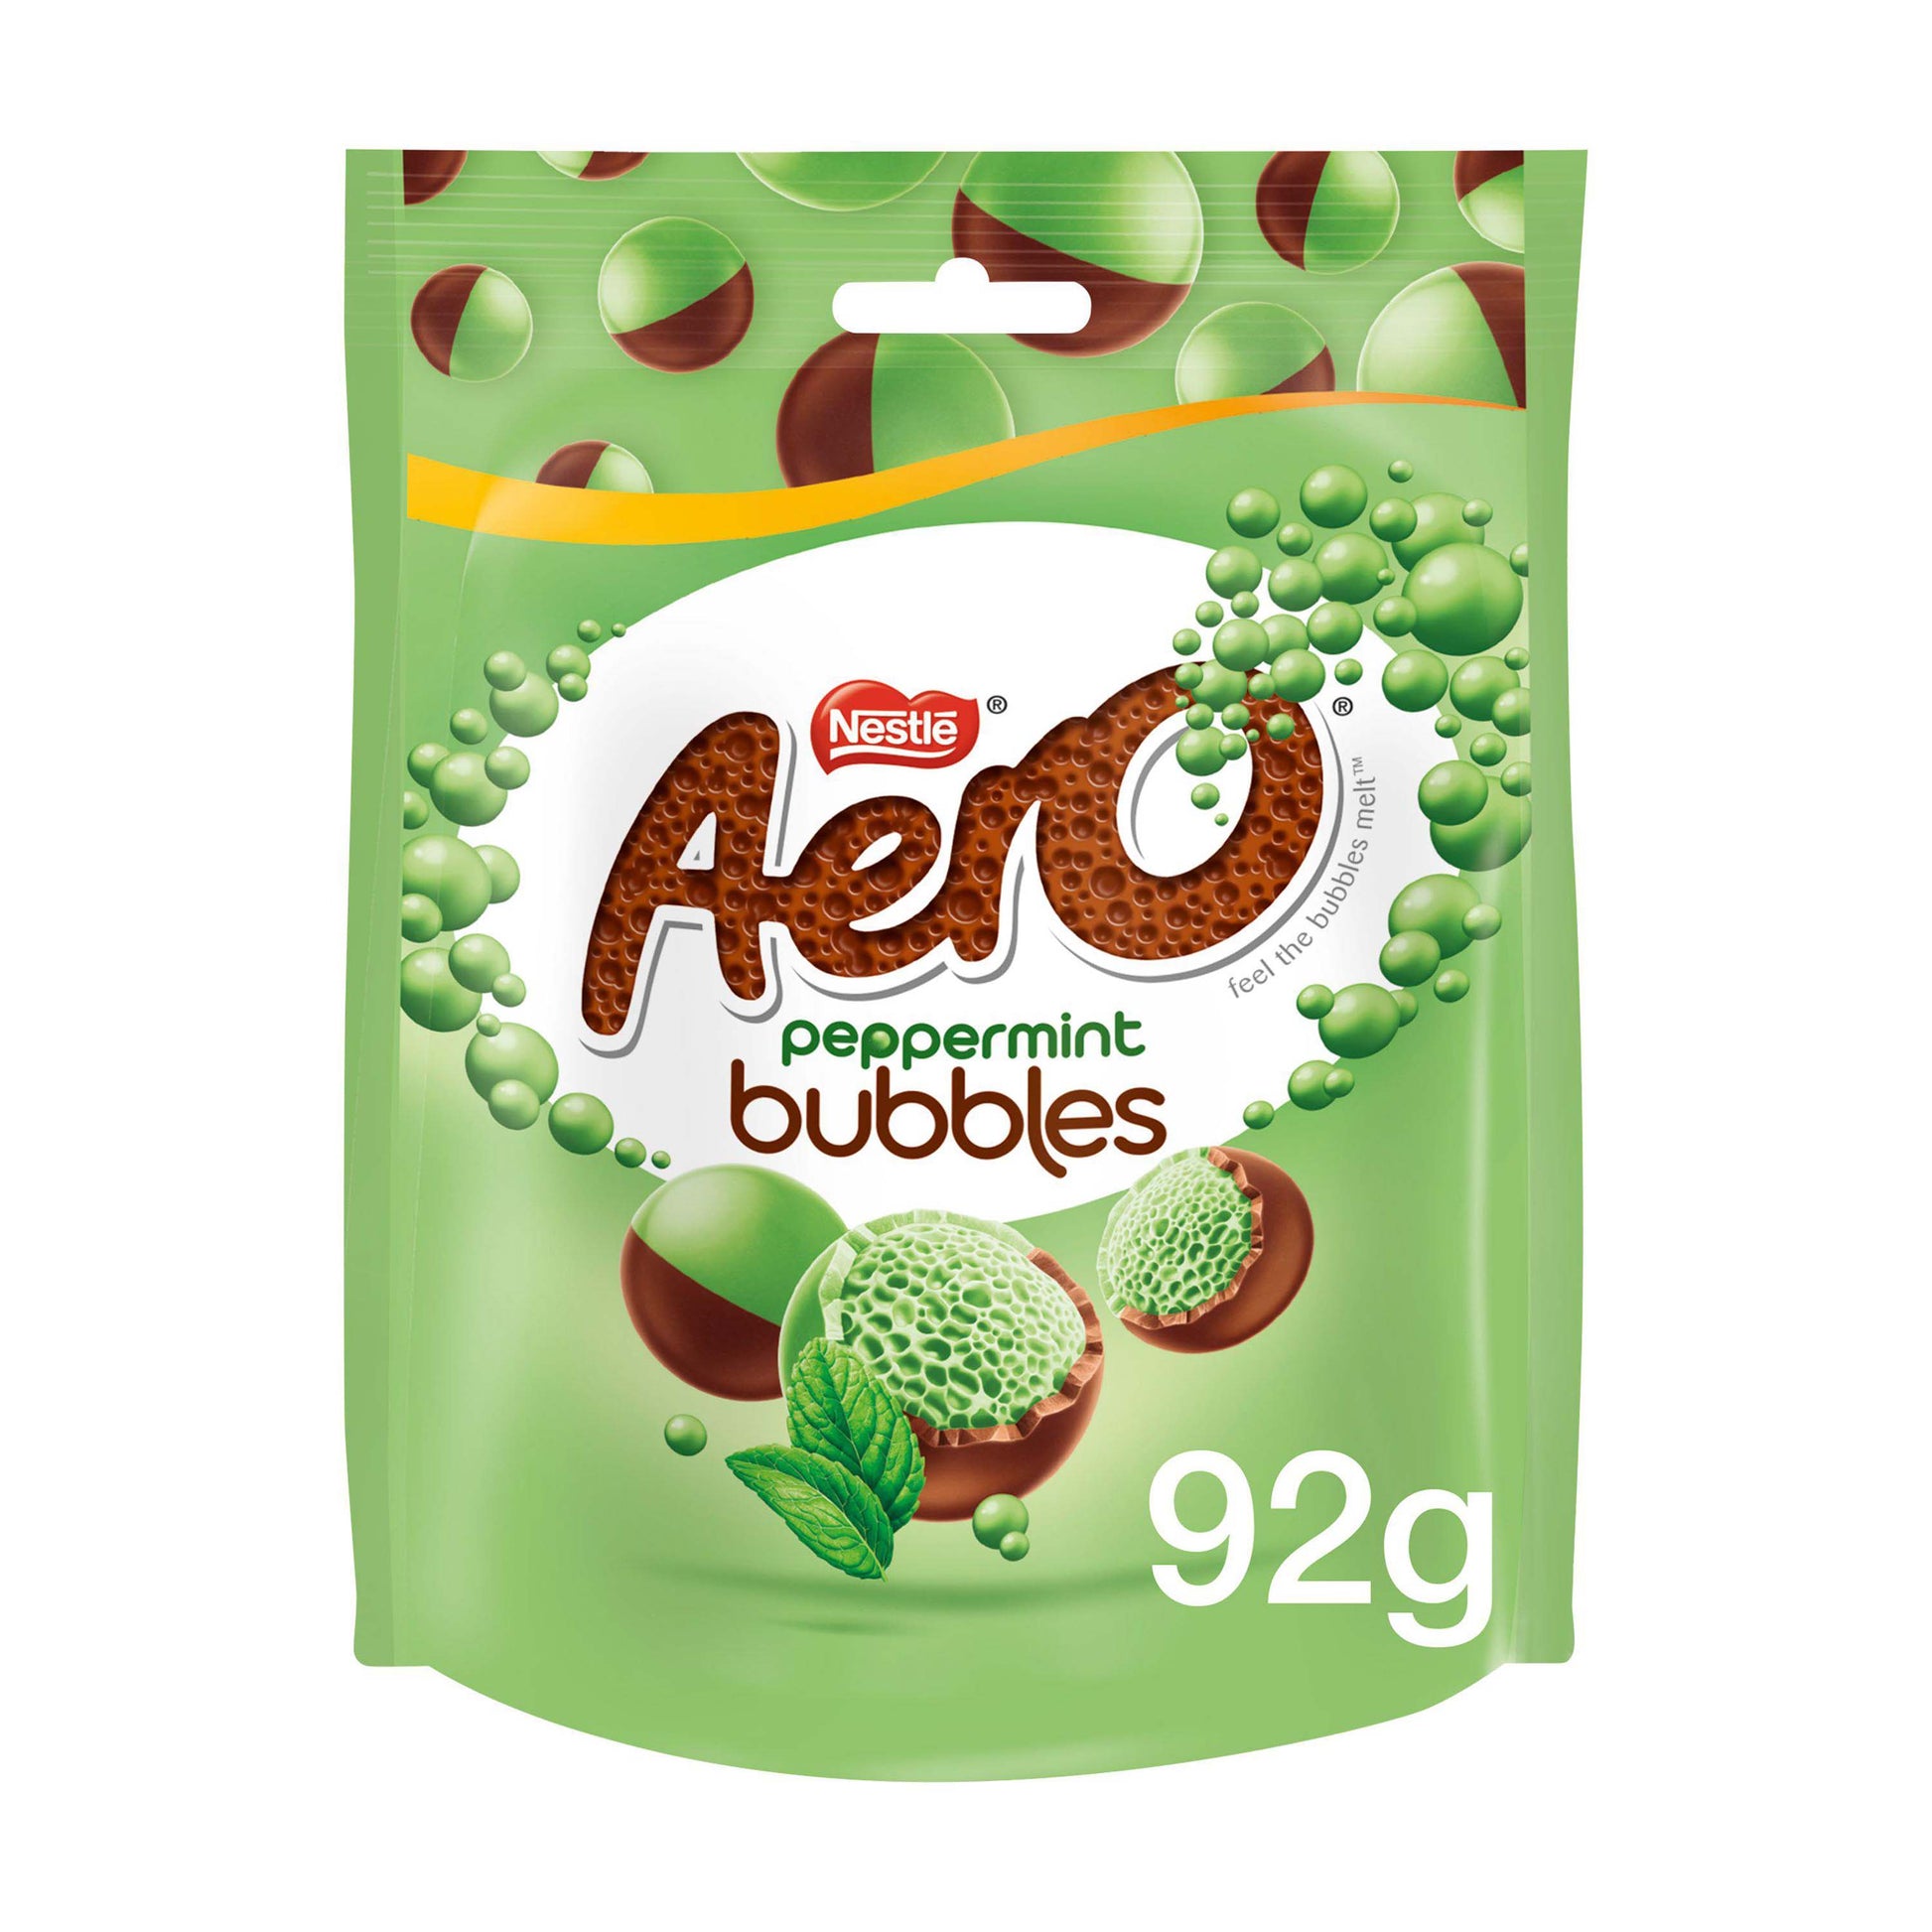 Aero Bubbles Peppermint Mint Chocolate Sharing Bag - 92g - British Snacks